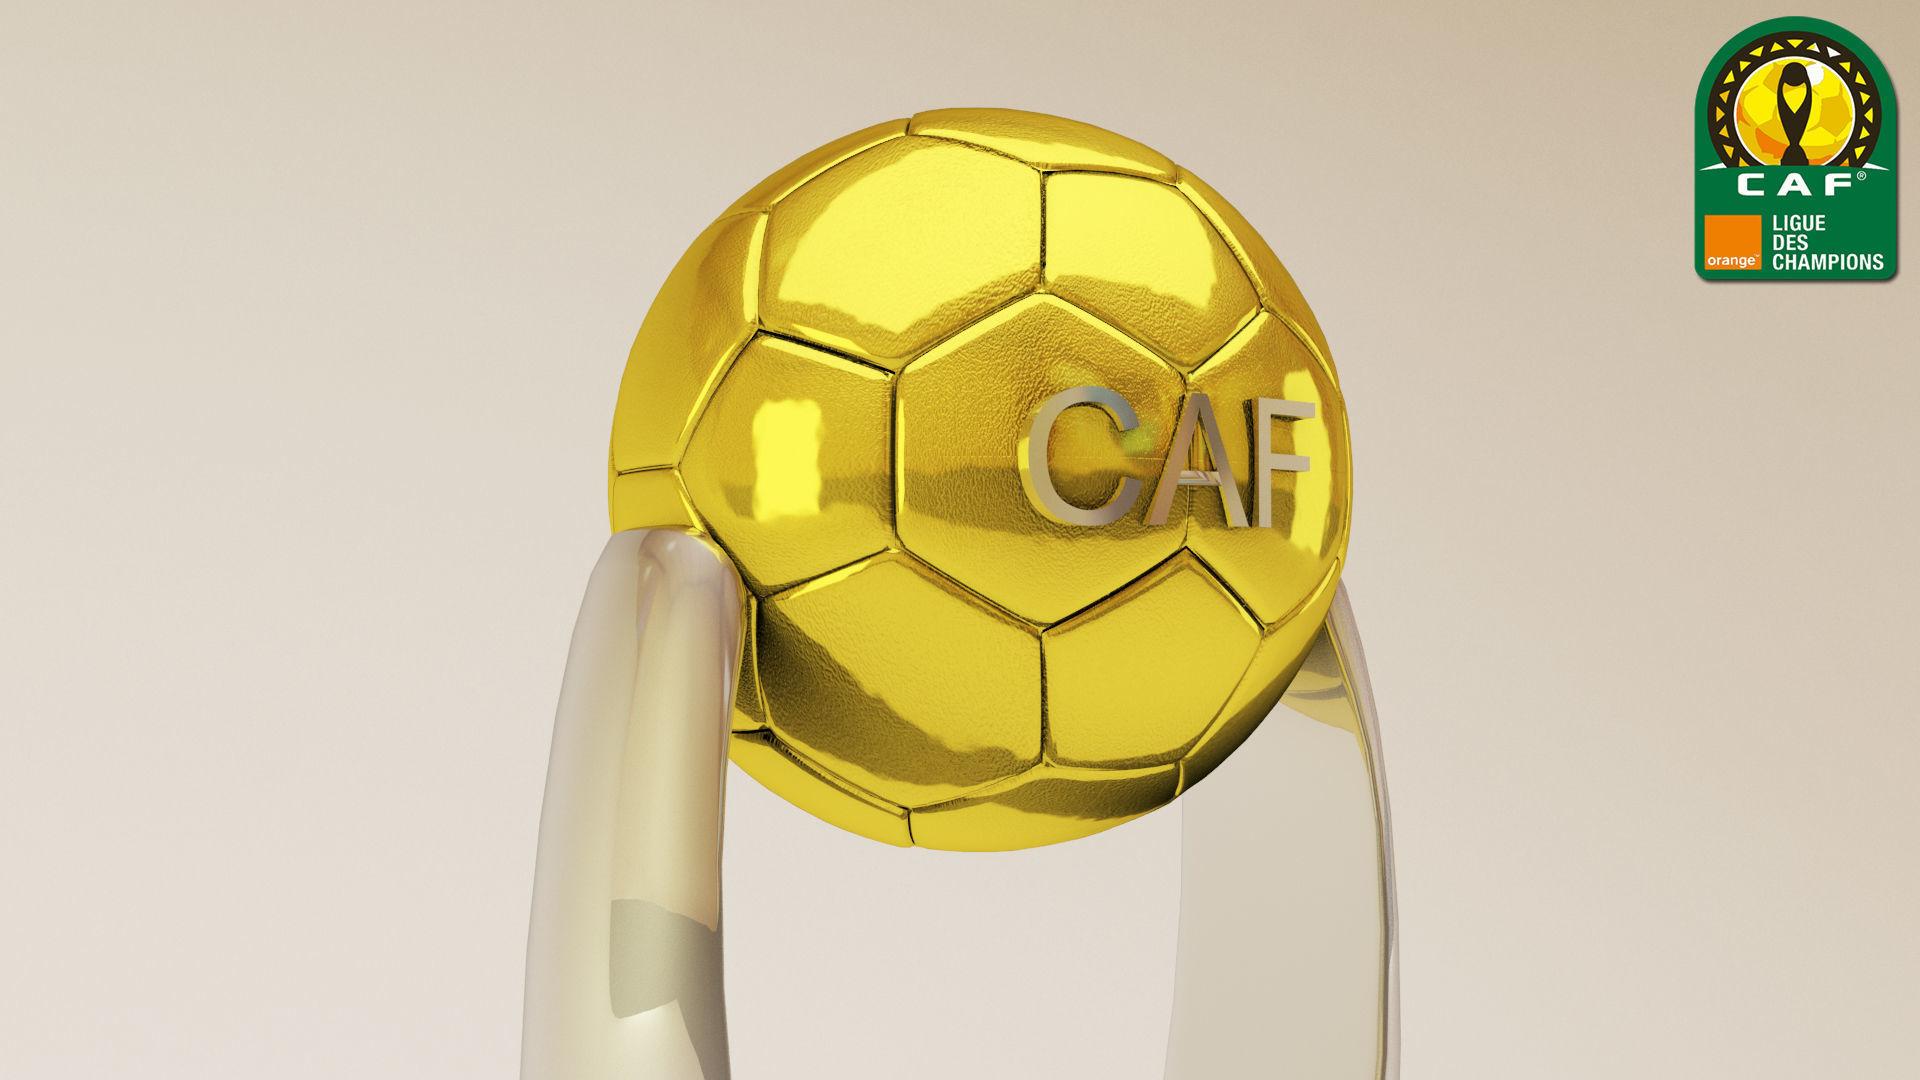 Лига чемпионов каф. CAF Cup League Champions. Кубок CAF Champions League. UEFA CAF. Лига чемпионов 2022 logo.